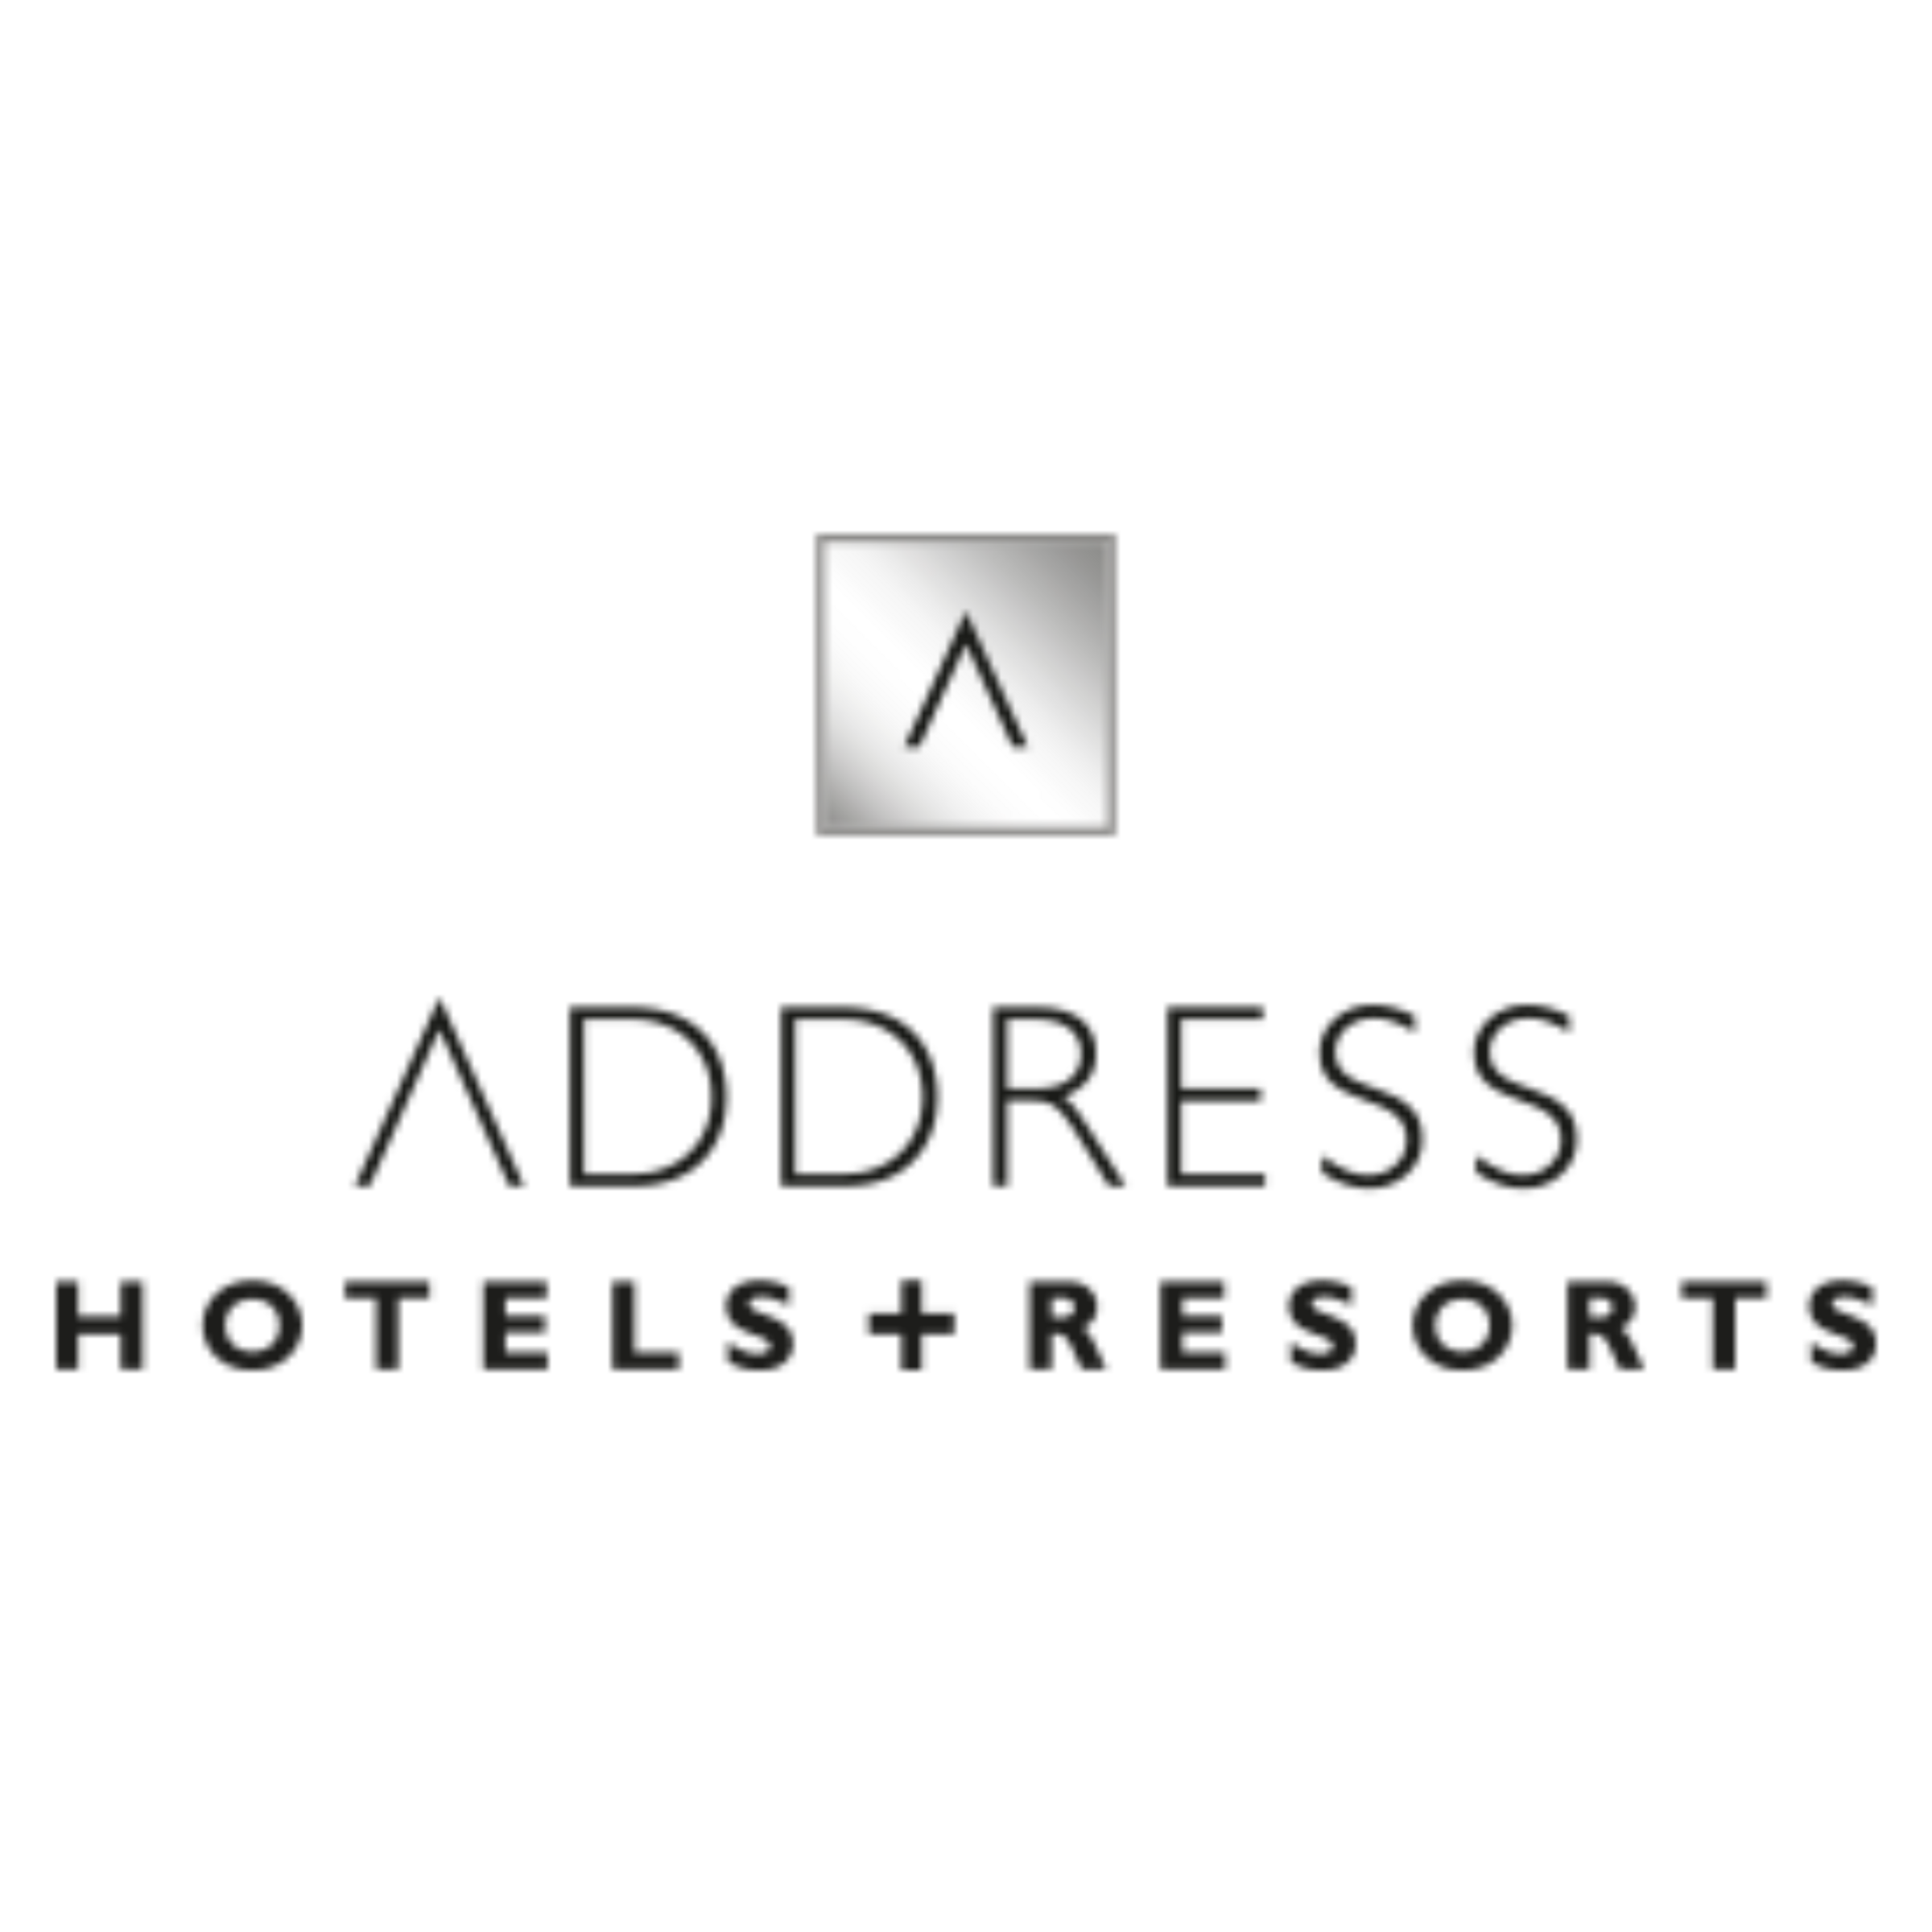 address hotels and resorts